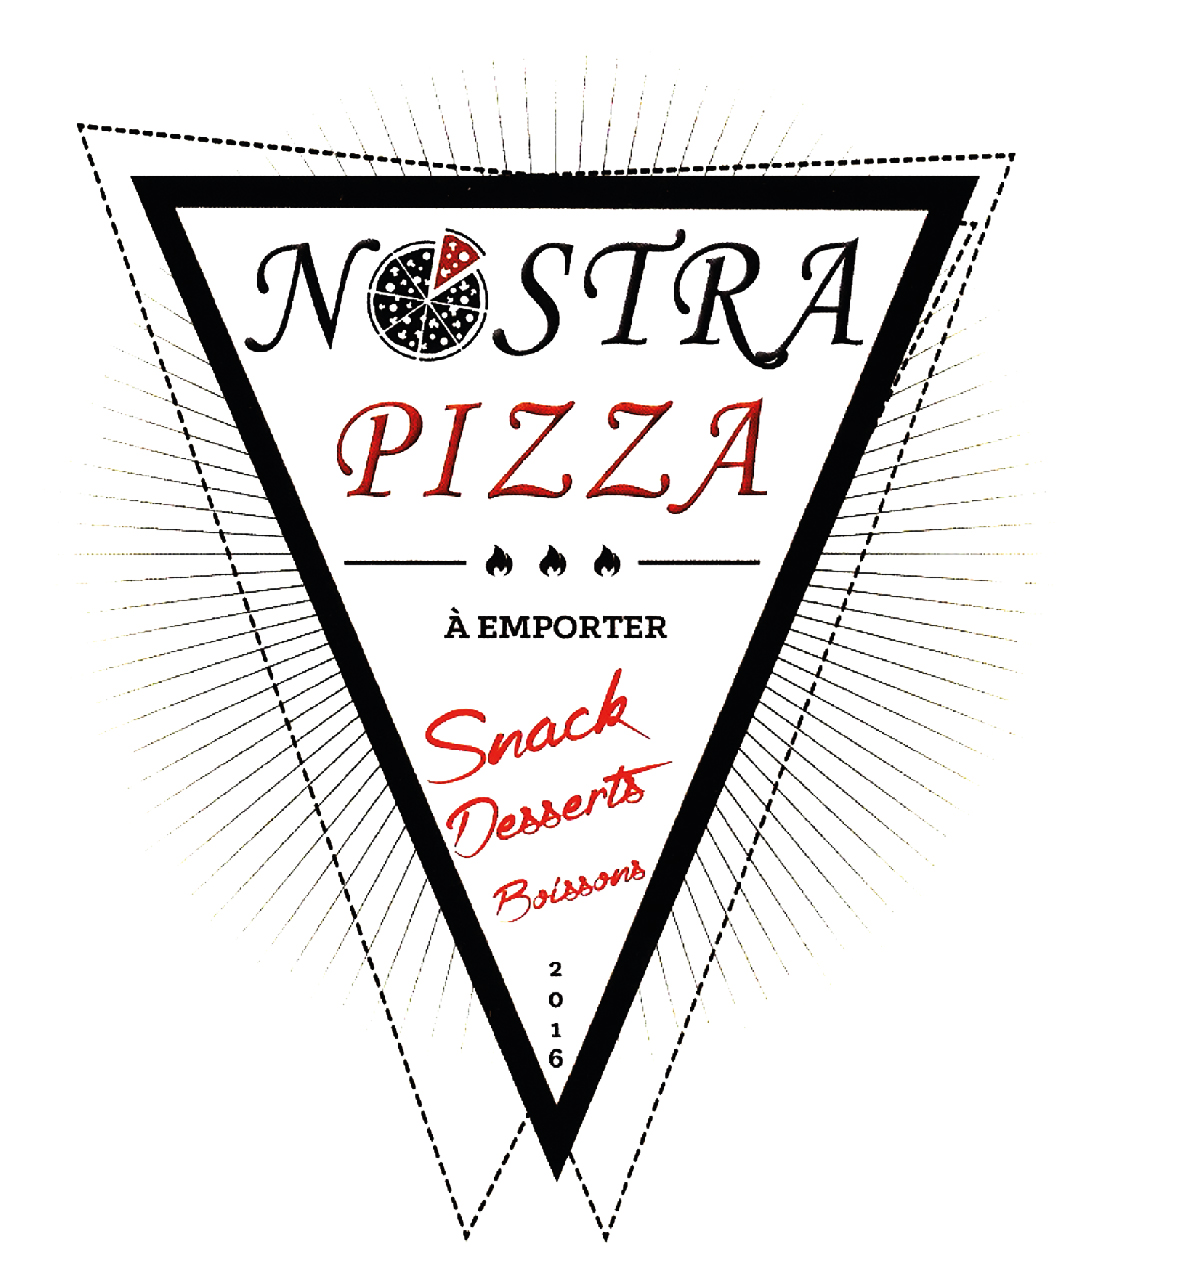 Nostra Pizza